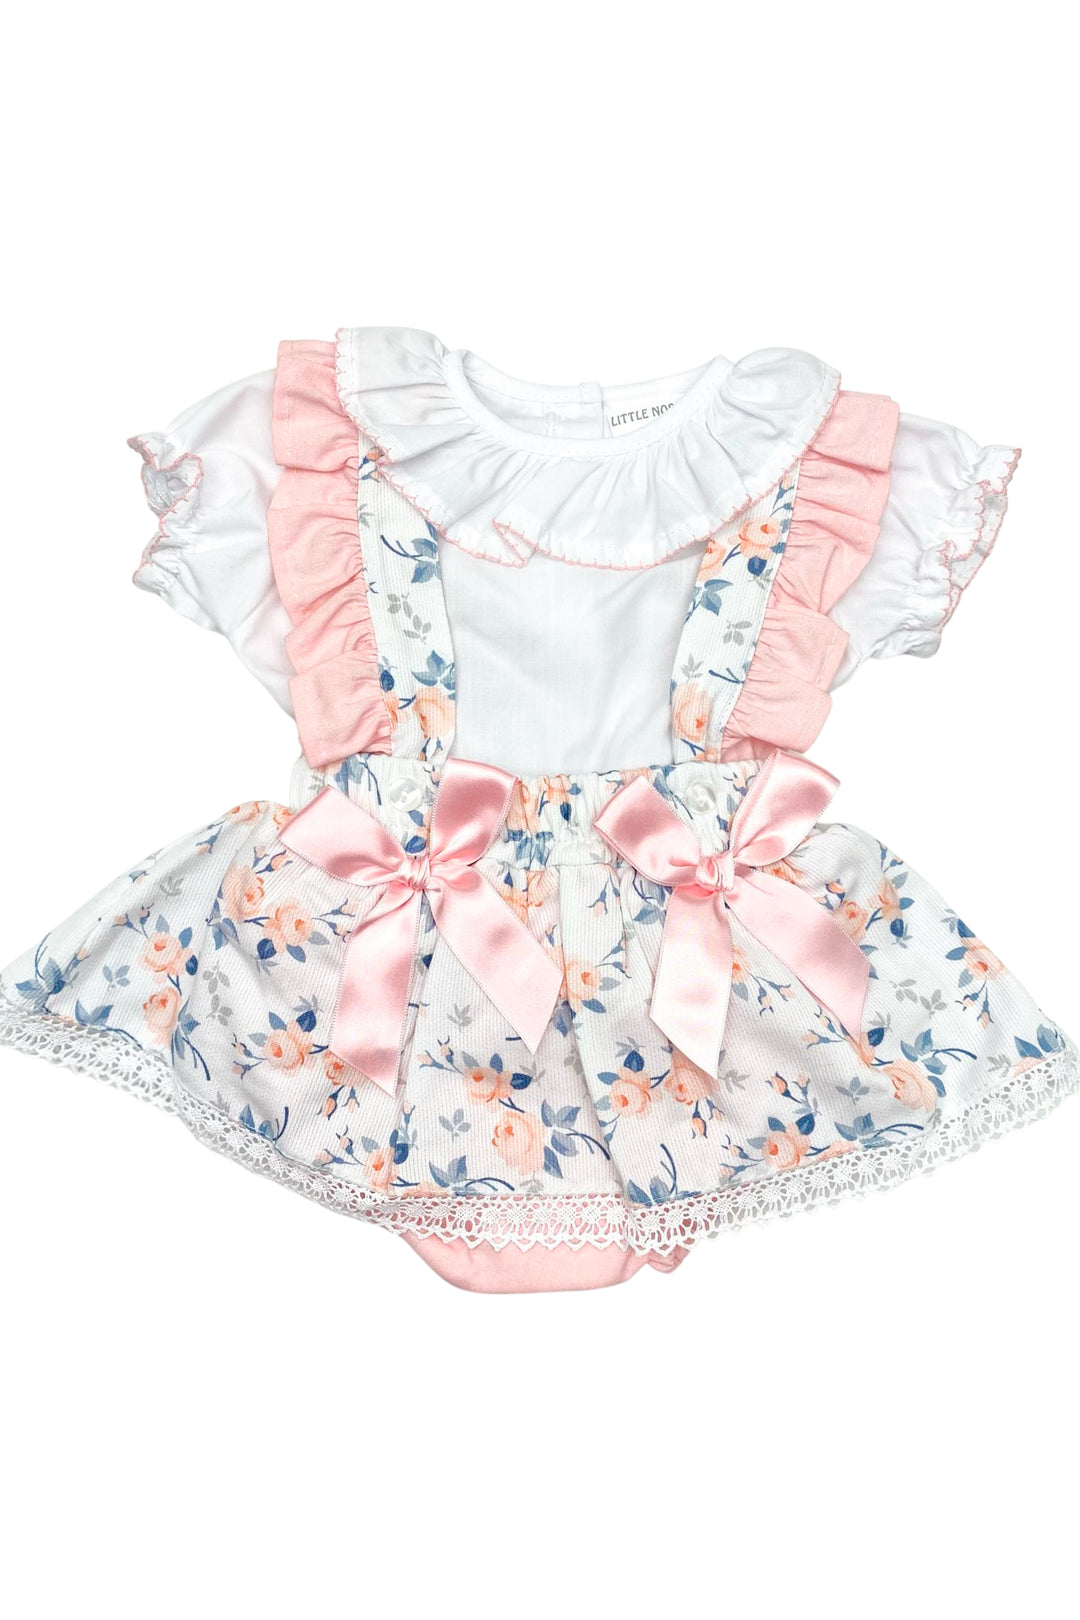 Little Nosh "Florence" Blouse & Peach Floral Bloomer Skirt | Millie and John